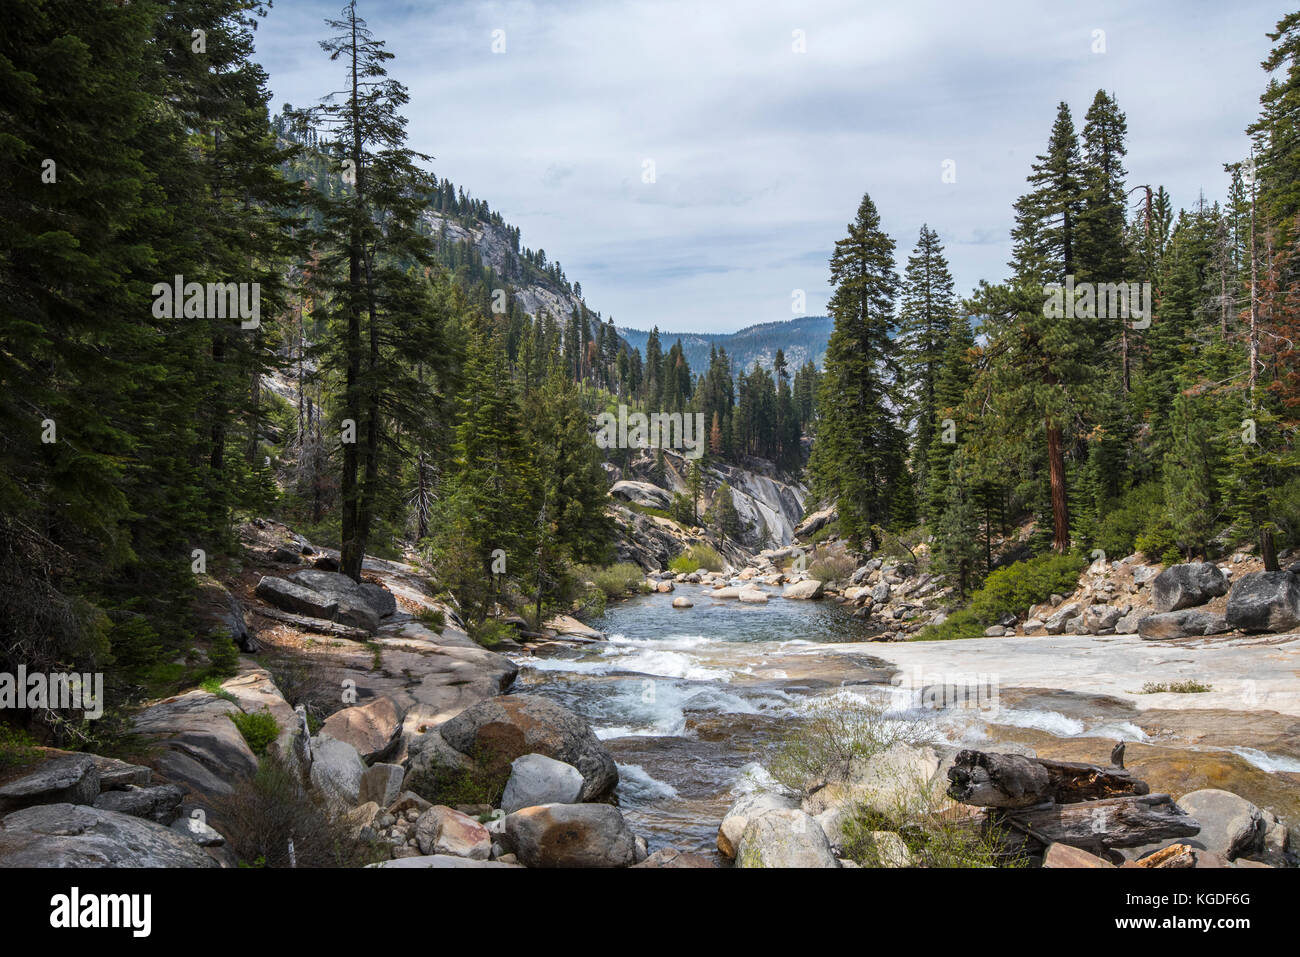 The Merced River flows through Yosemite National Park. Stock Photo